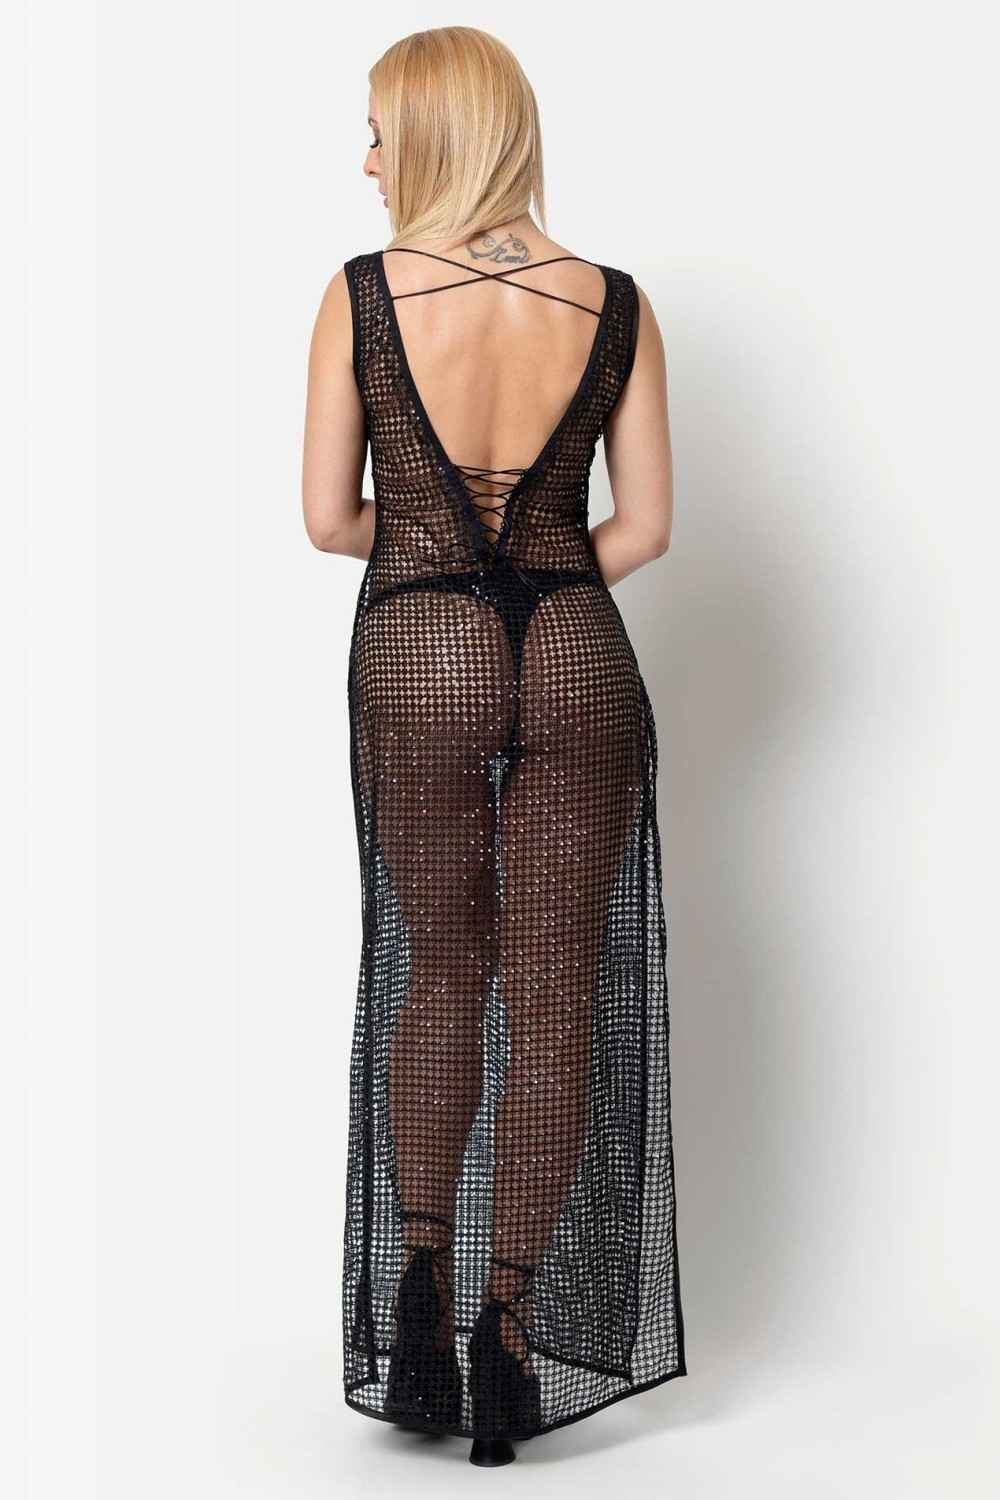 Mandelieu, long sequin sexy dress - Patrice Catanzaro Official Website